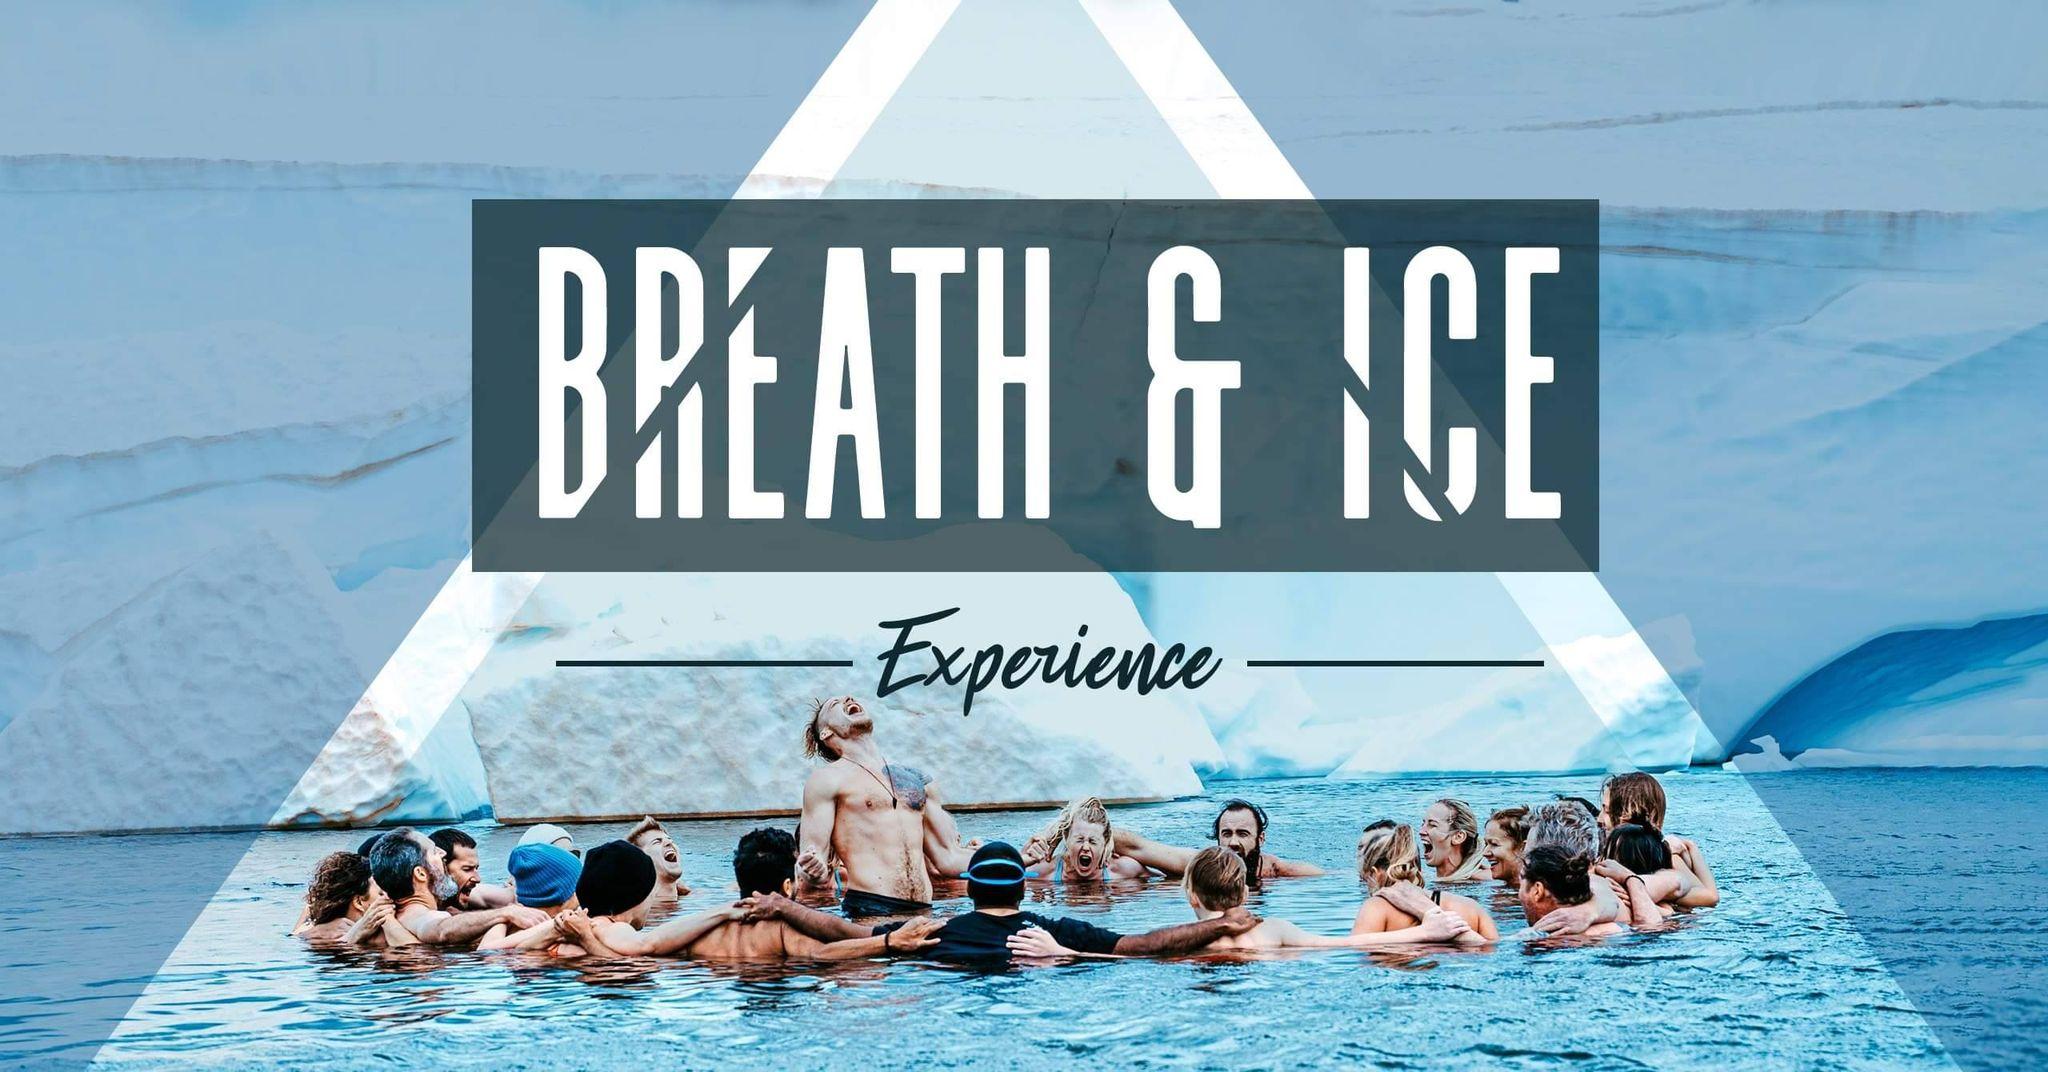 Breath & Ice Experience - Gold Coast